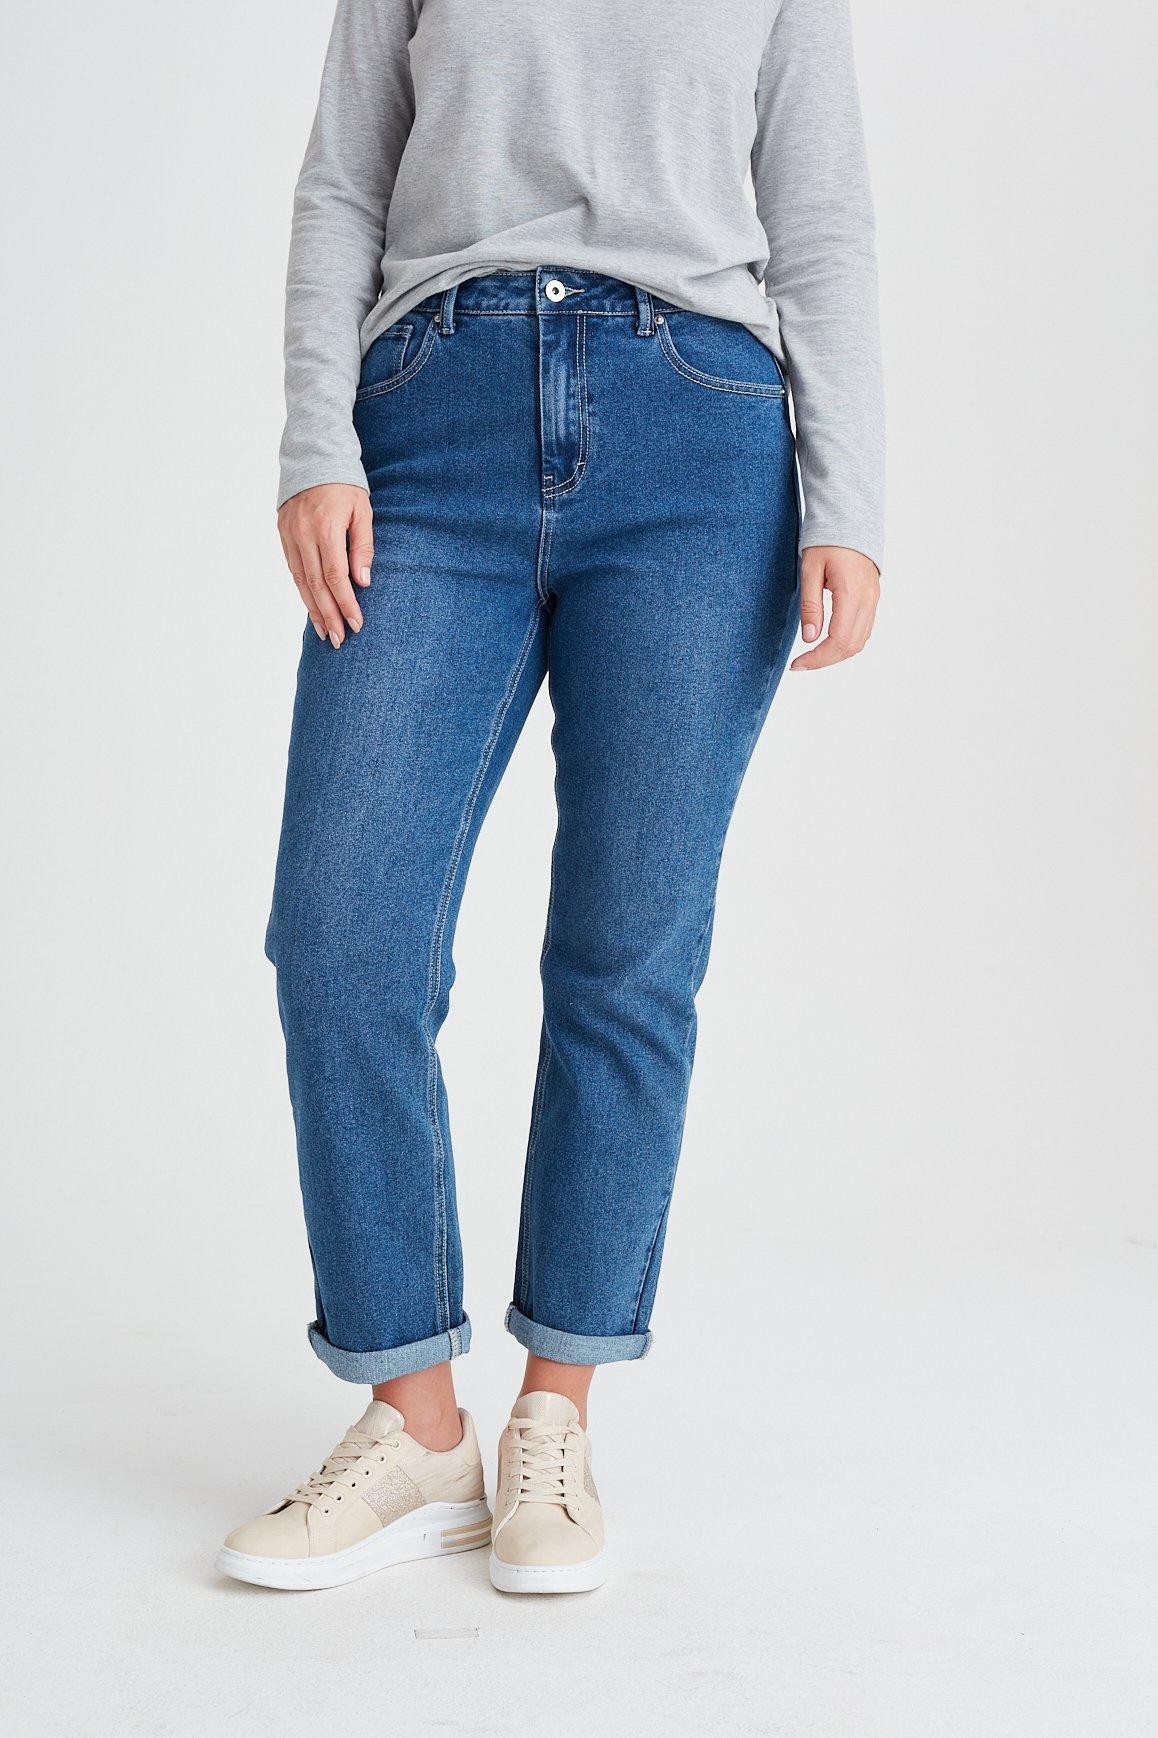 Shop Women's Denim | Buy Jeans and Jeggings Online | MILADYS